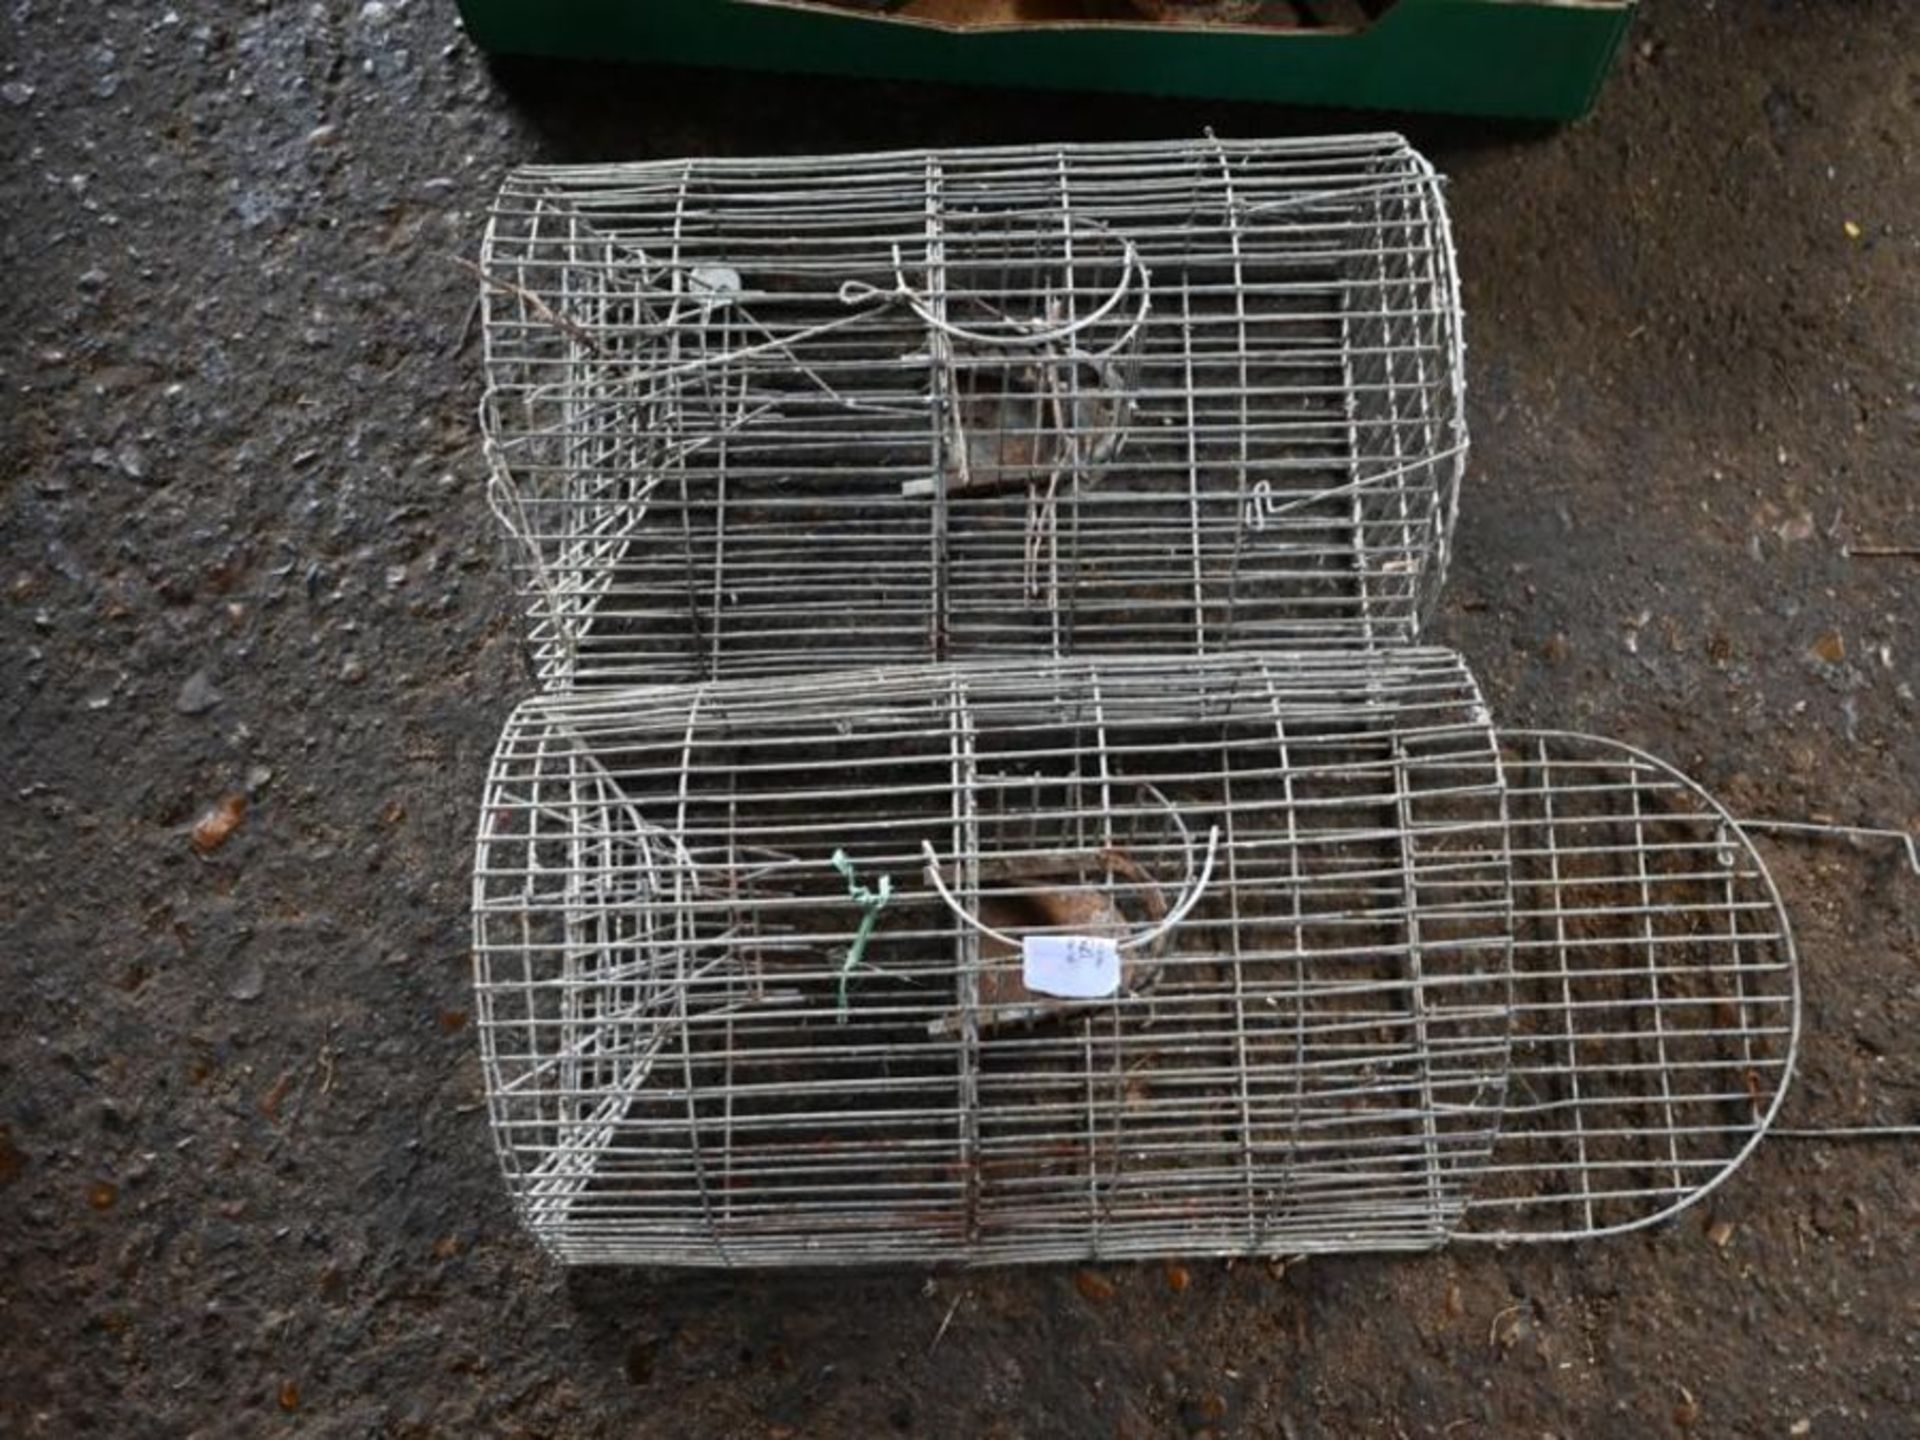 2 small animal pest control traps